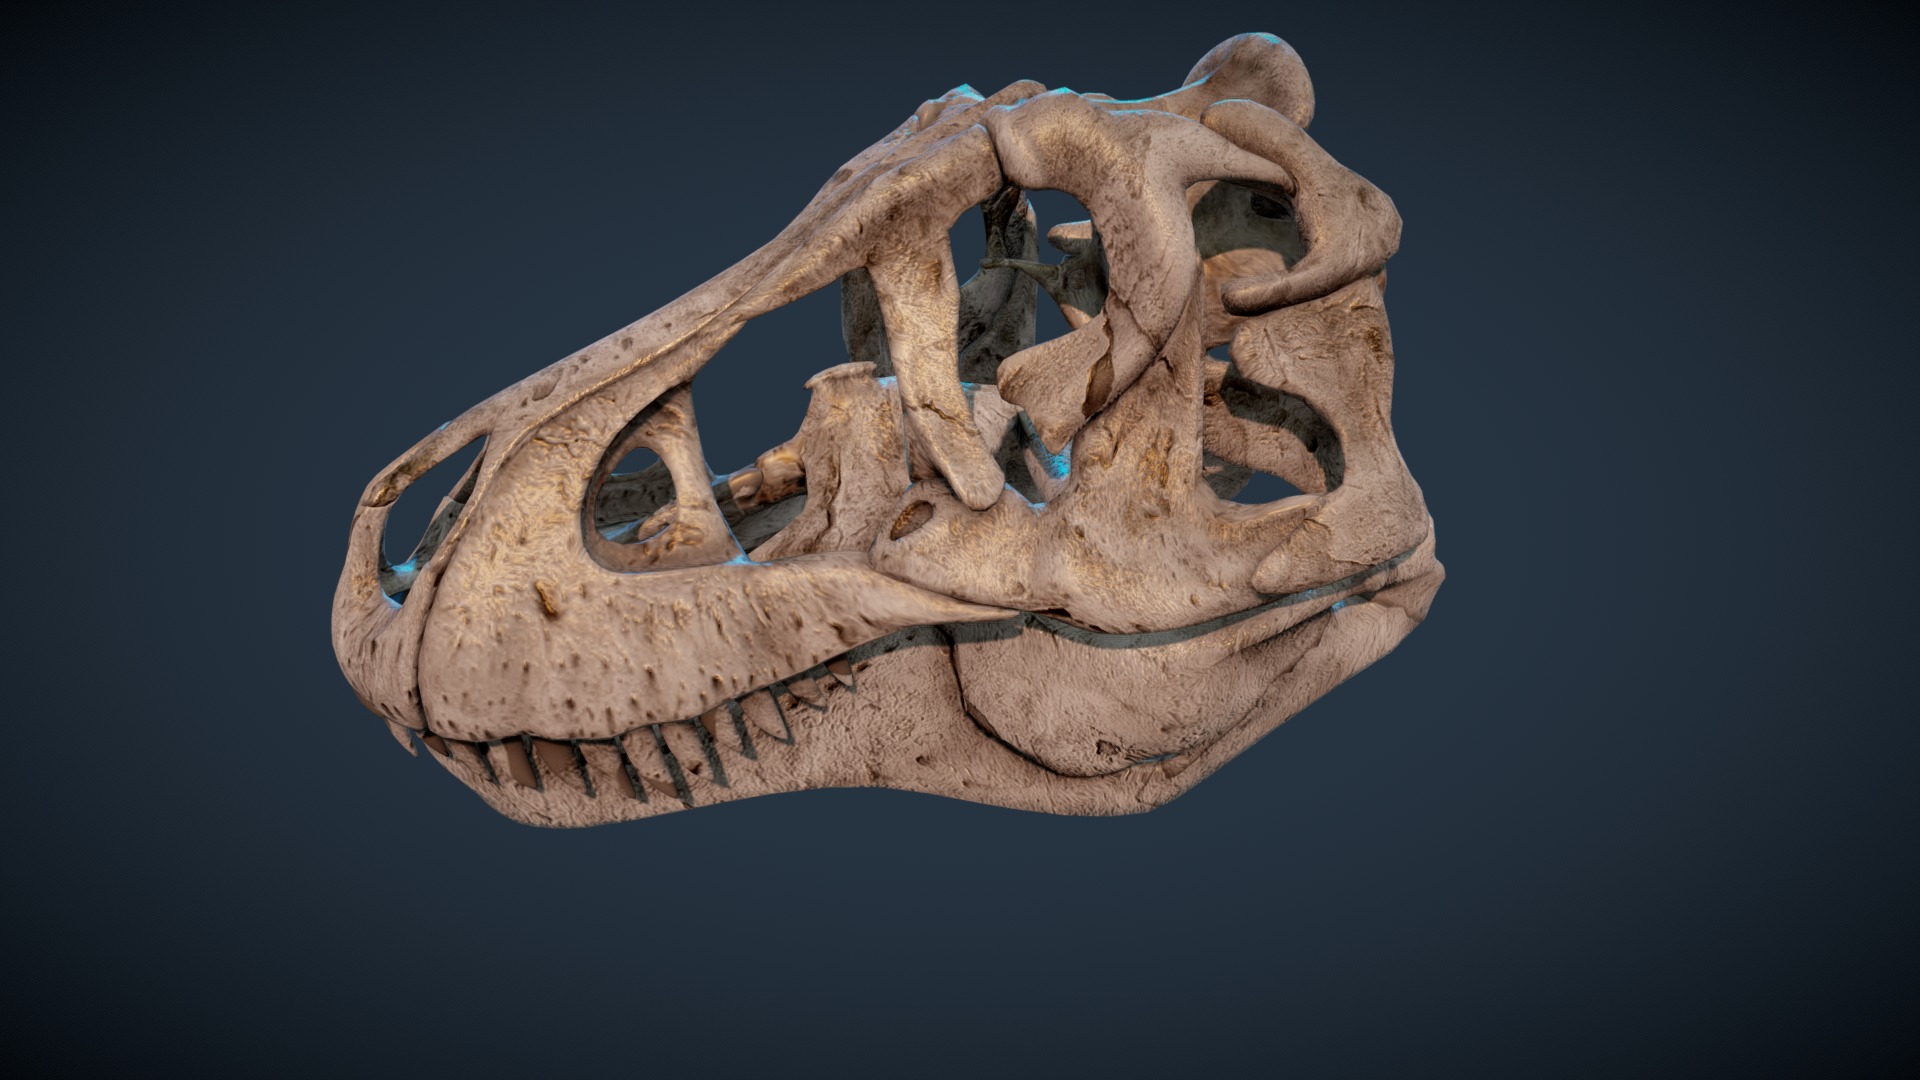 Yet Another Rex skull